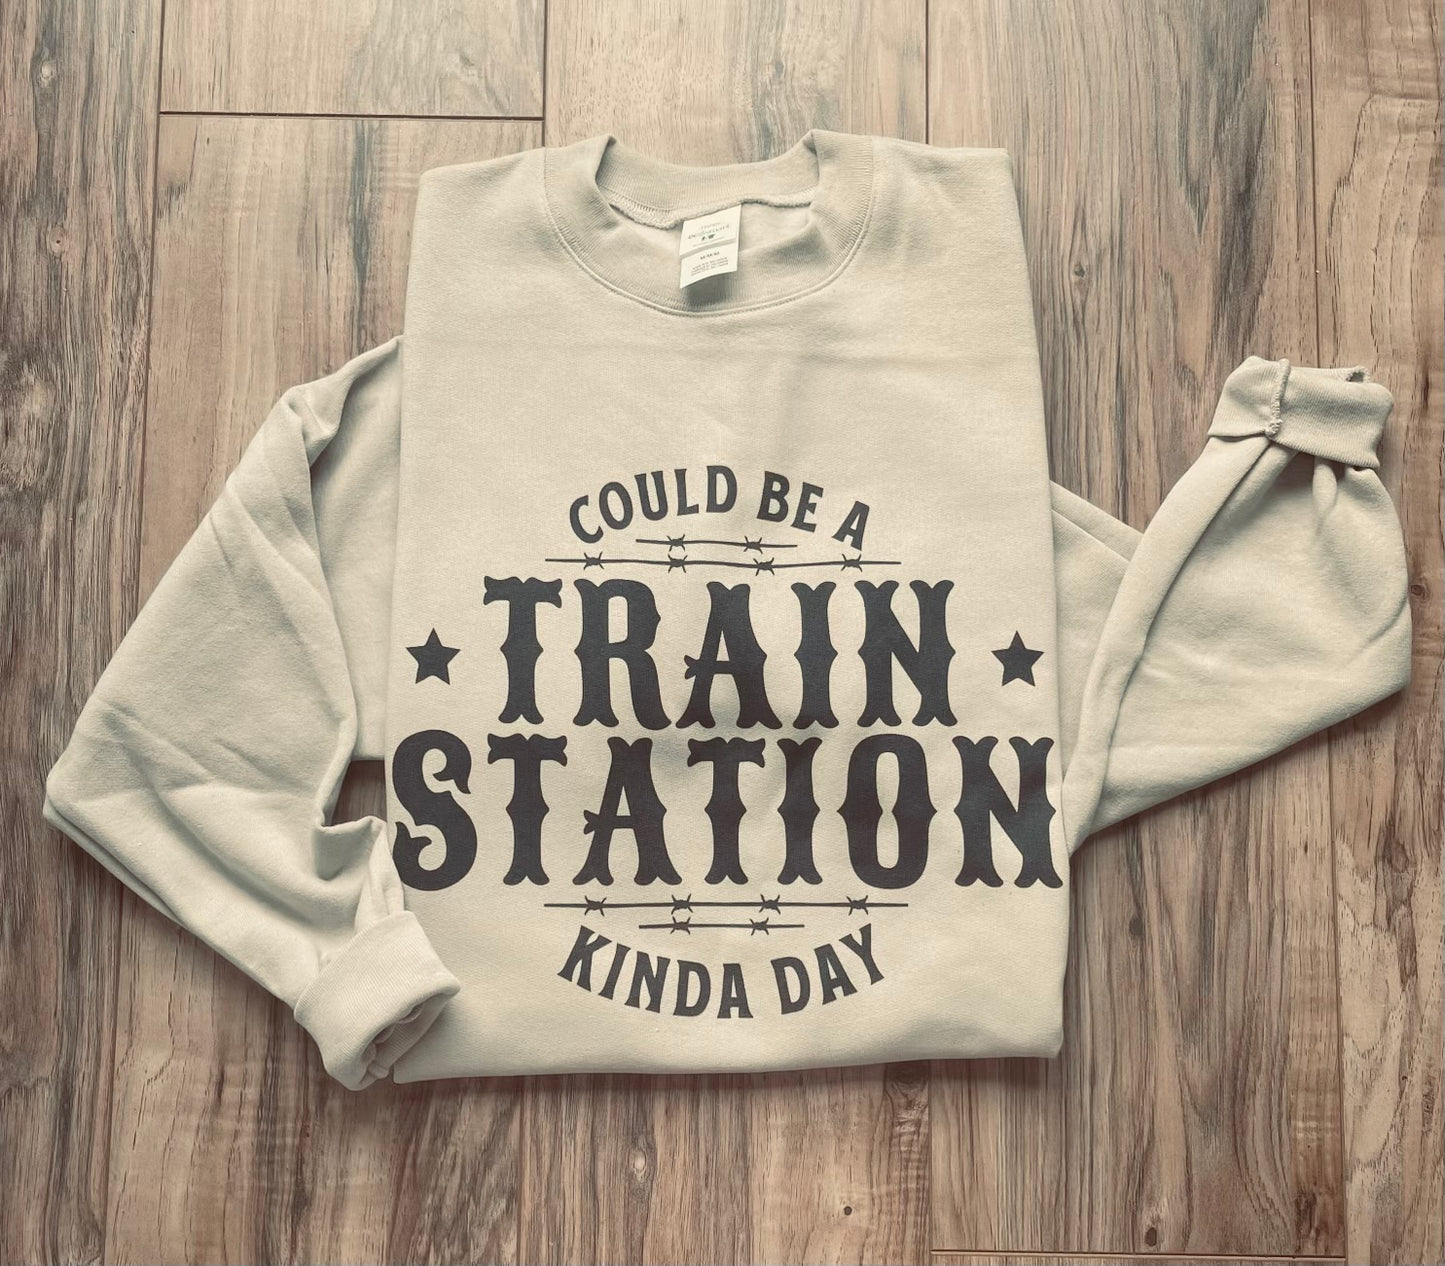 Train Station Kinda Day